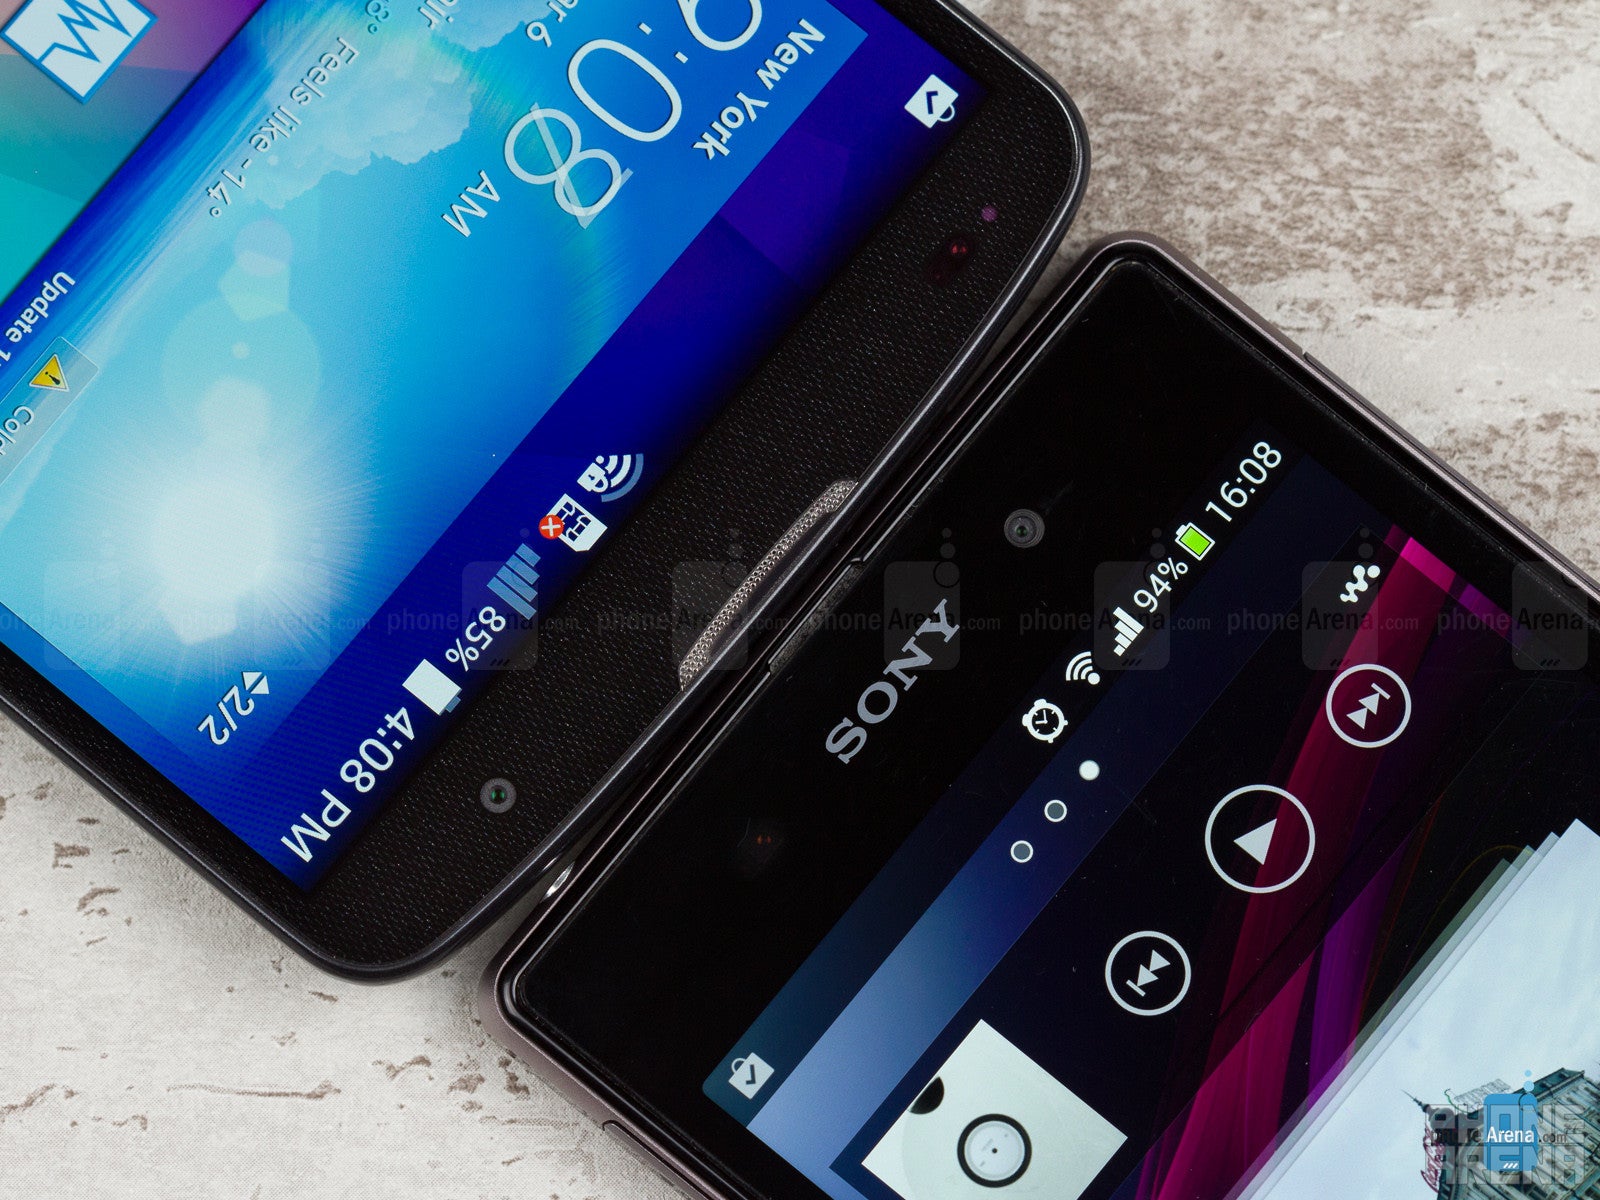 LG G Pro 2 vs Sony Xperia Z1